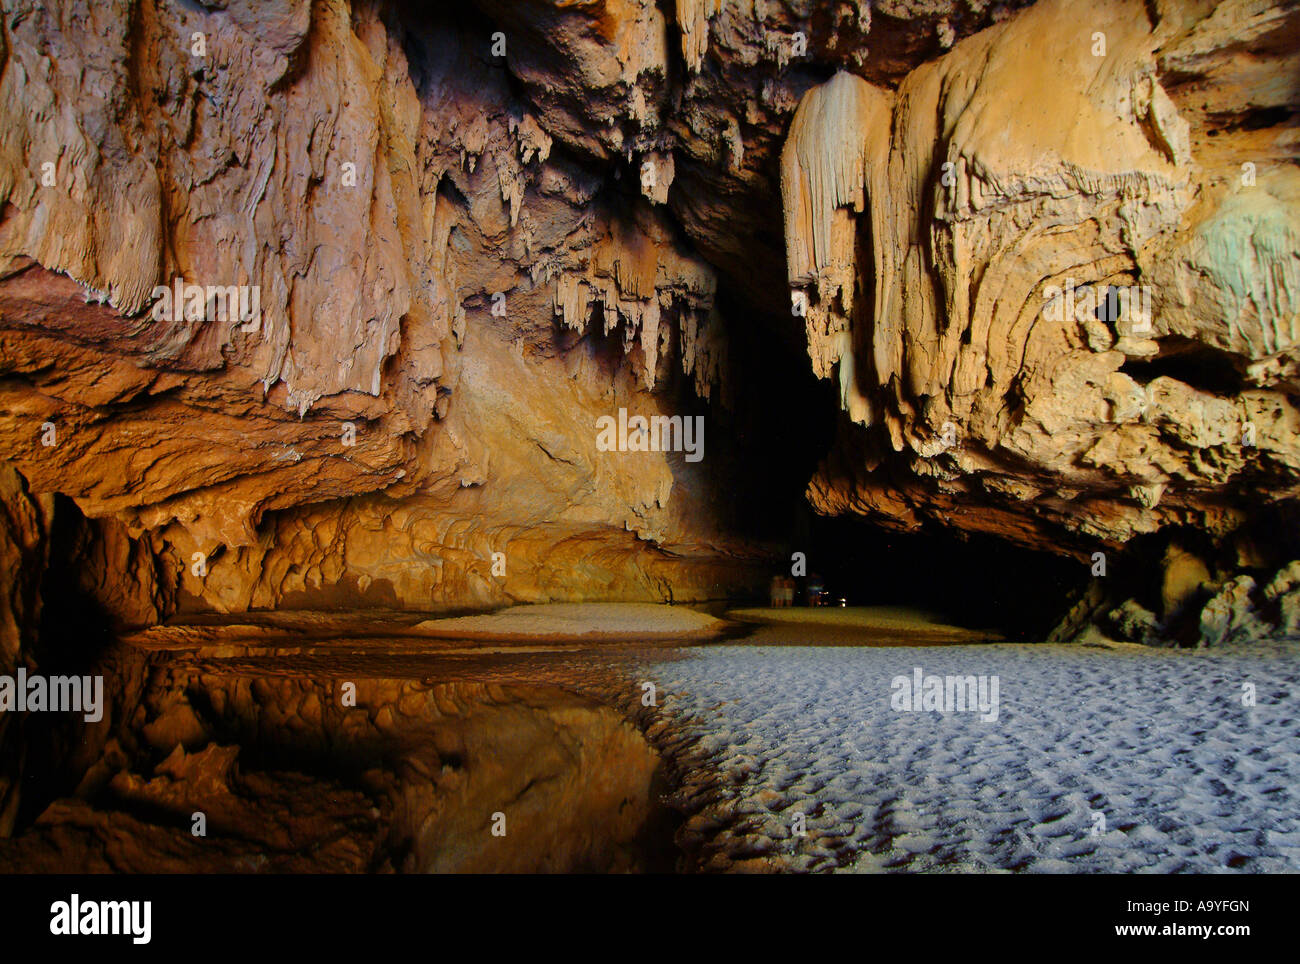 Entrance of Tunnel Creek Cave, Kimberleys, Australia Stock Photo